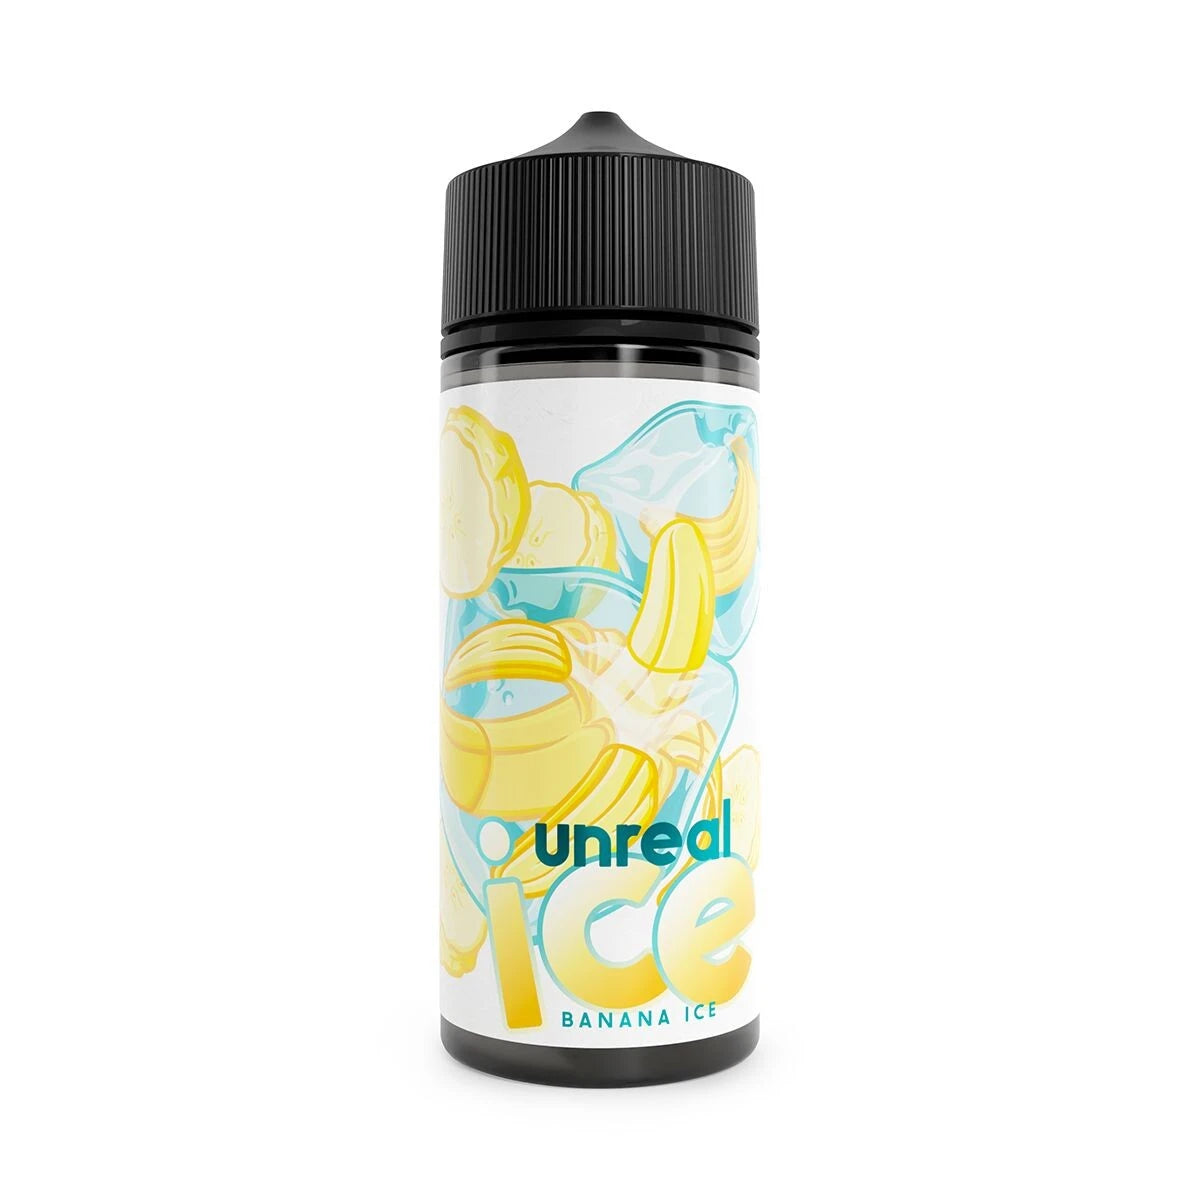 Banana Ice Shortfill by Unreal Ice. - 100ml-Supergood.